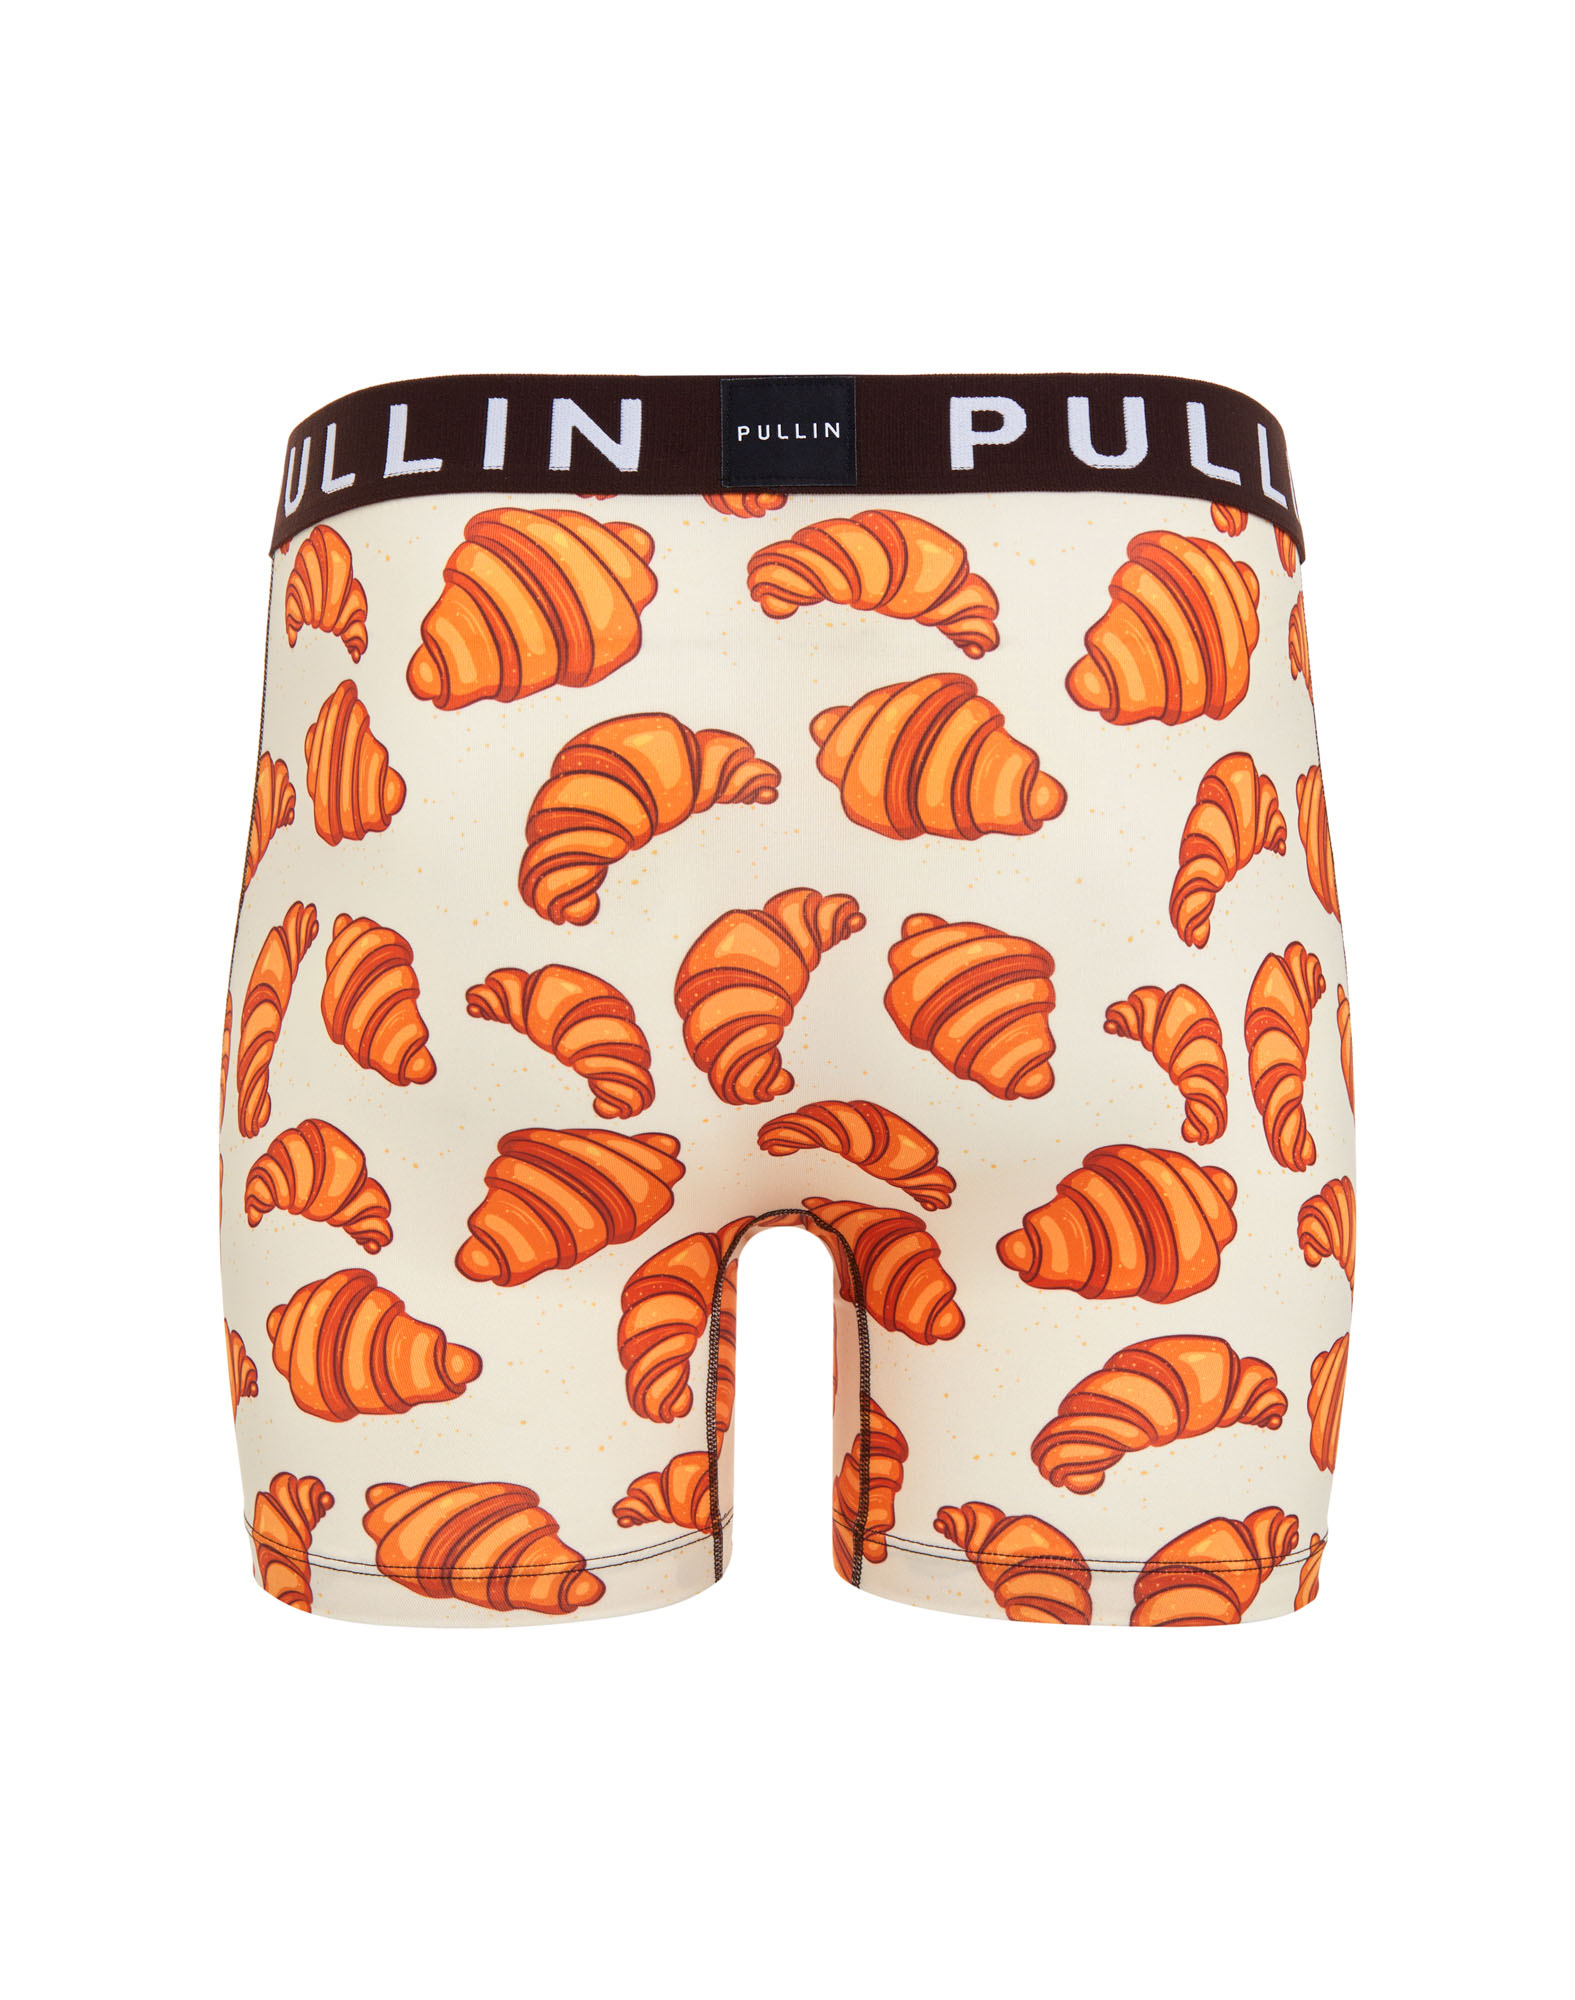 Pullin Fashion 2 Men's Boxers - Tigerflower – Monaliza's Fine Lingerie